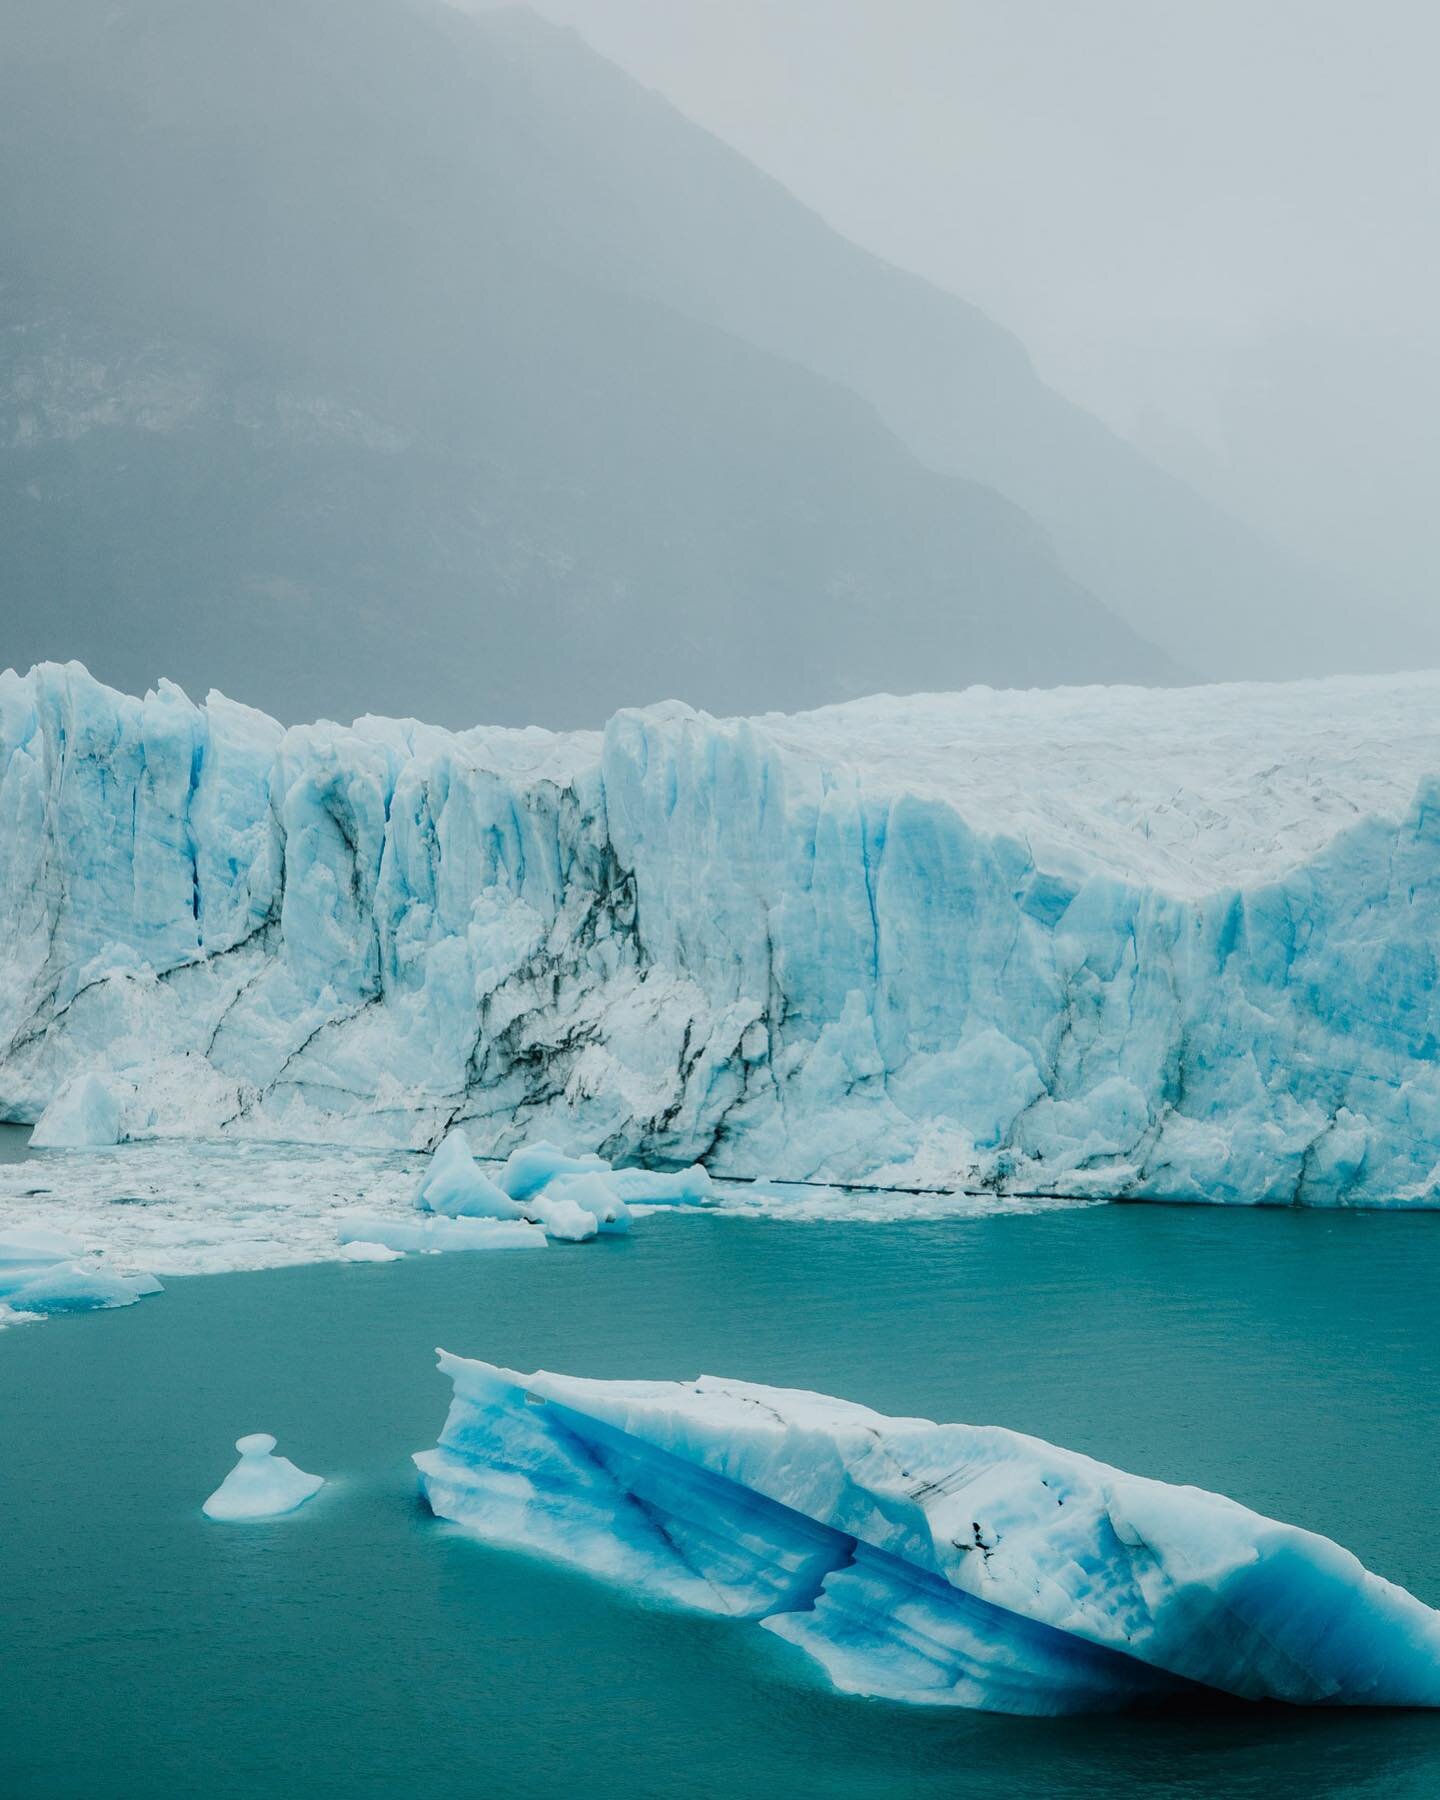 The cloudy weather emphasized the perfect blue tones of the Perito Moreno glacier. The front locally rises up to an impressive seventy meters! ❄️
.
.
.
#patagonia #peritomoreno #glaciersoftheworld #elcalafate